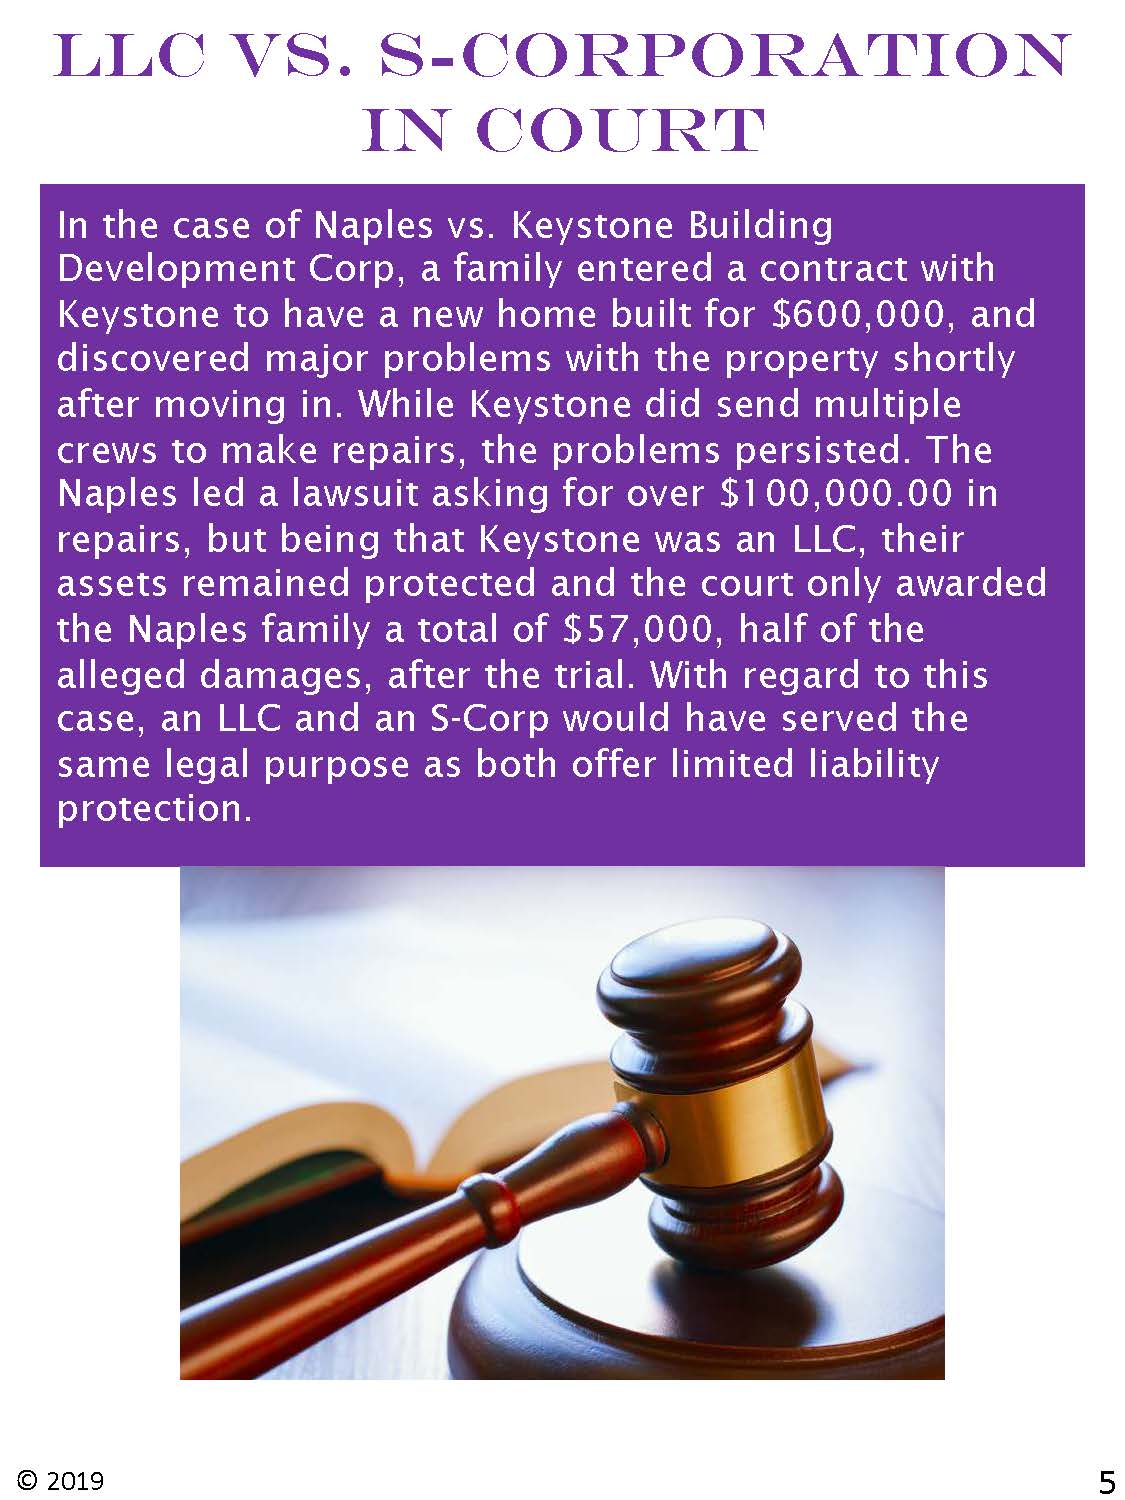 LLC vs S-corporation in court